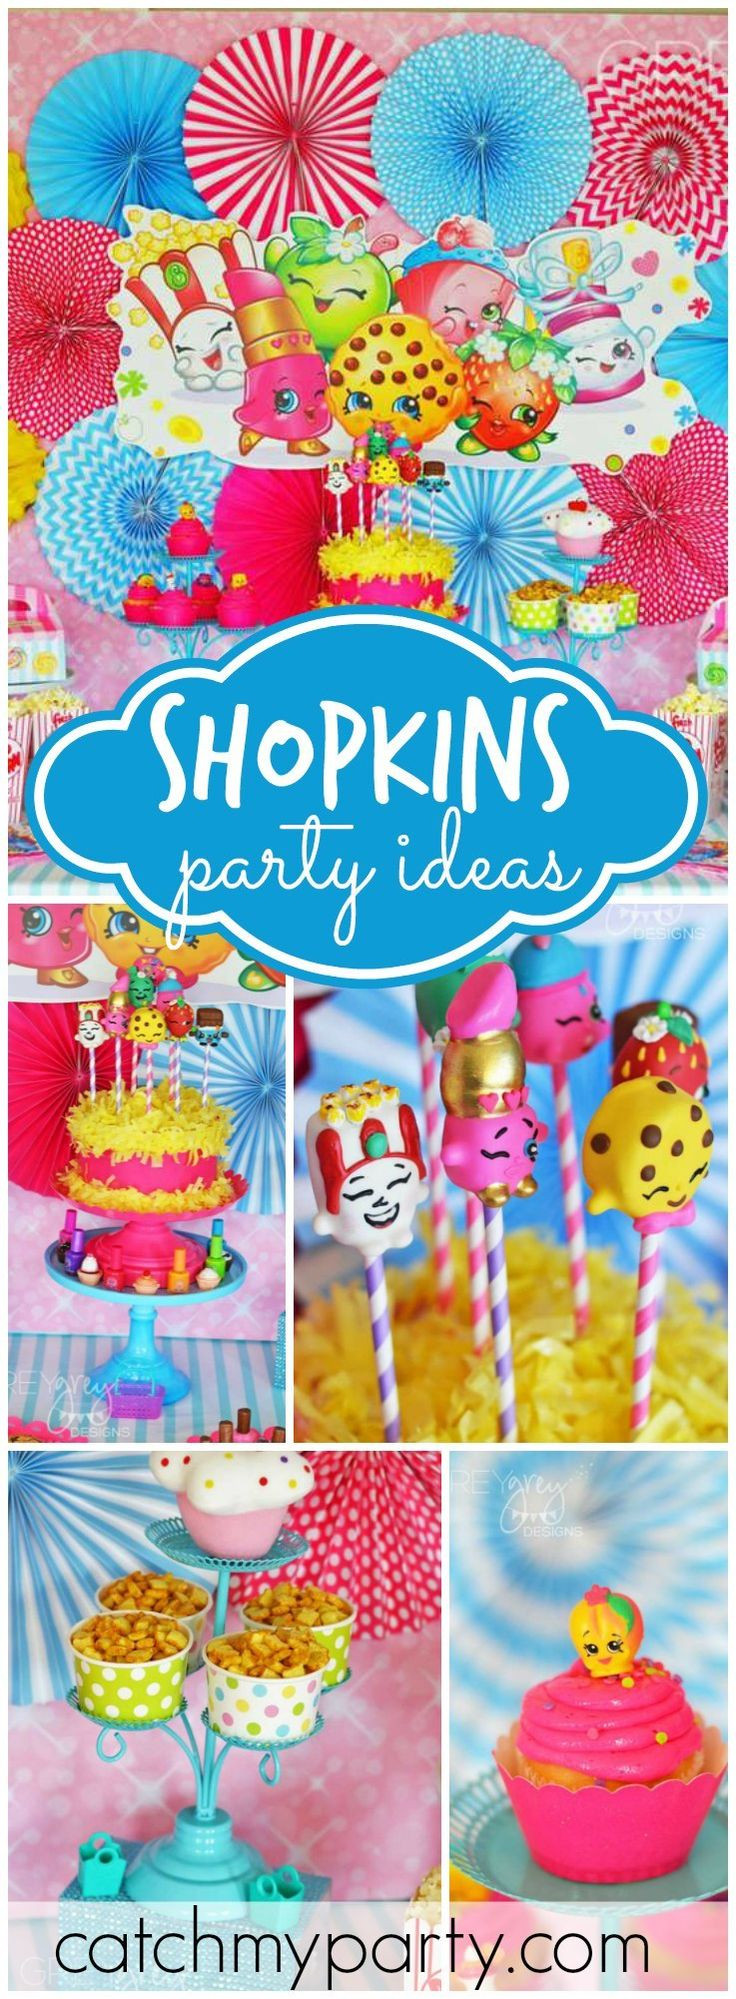 Shopkins Pool Party Ideas
 170 best Shopkins Party Ideas images on Pinterest